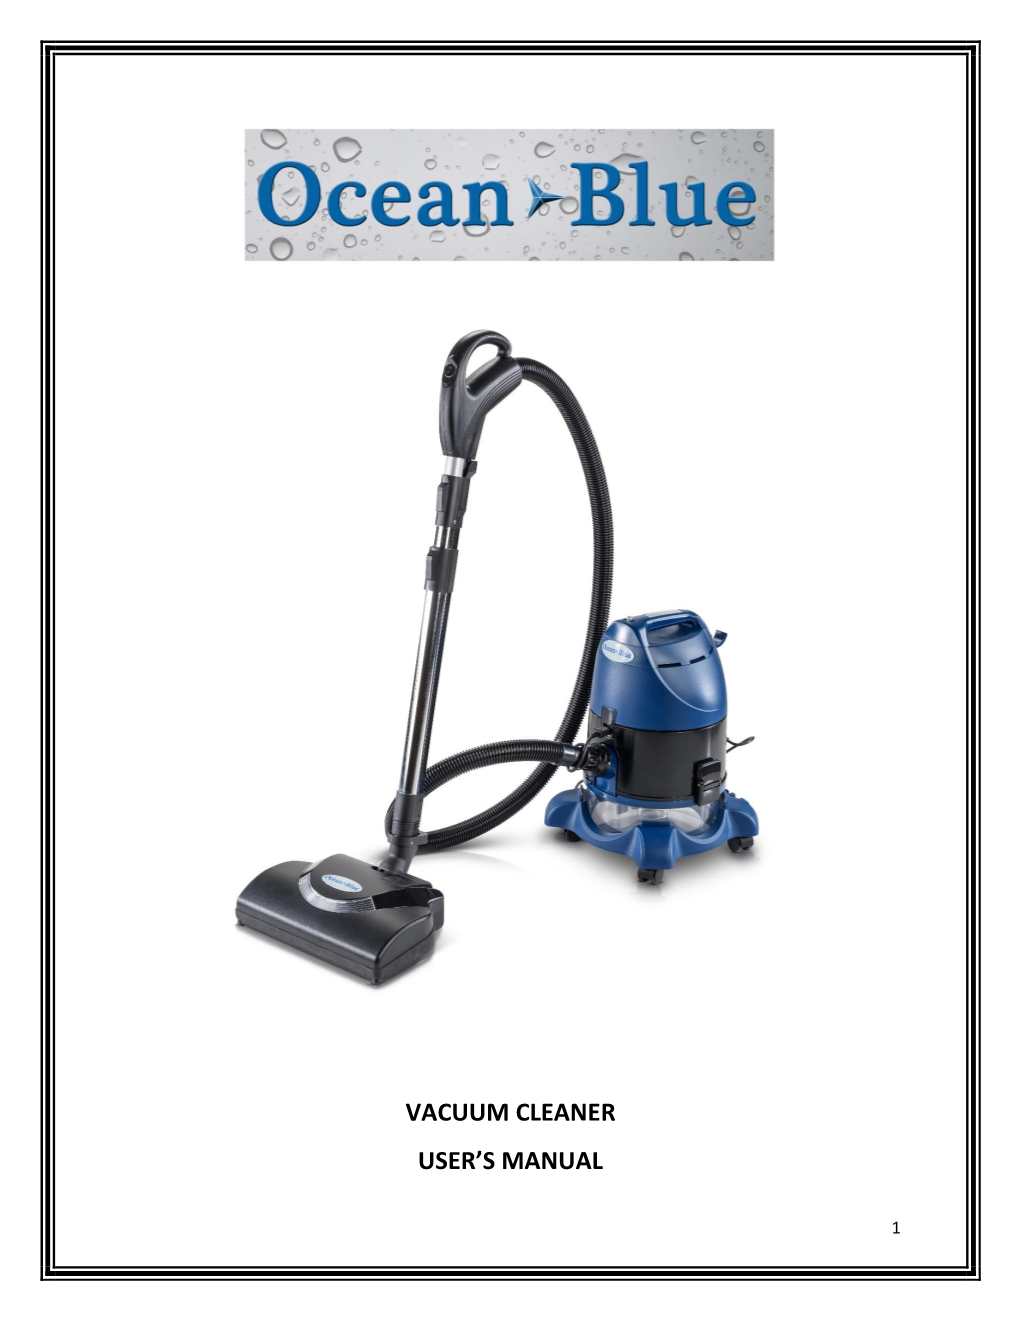 Vacuum Cleaner User's Manual